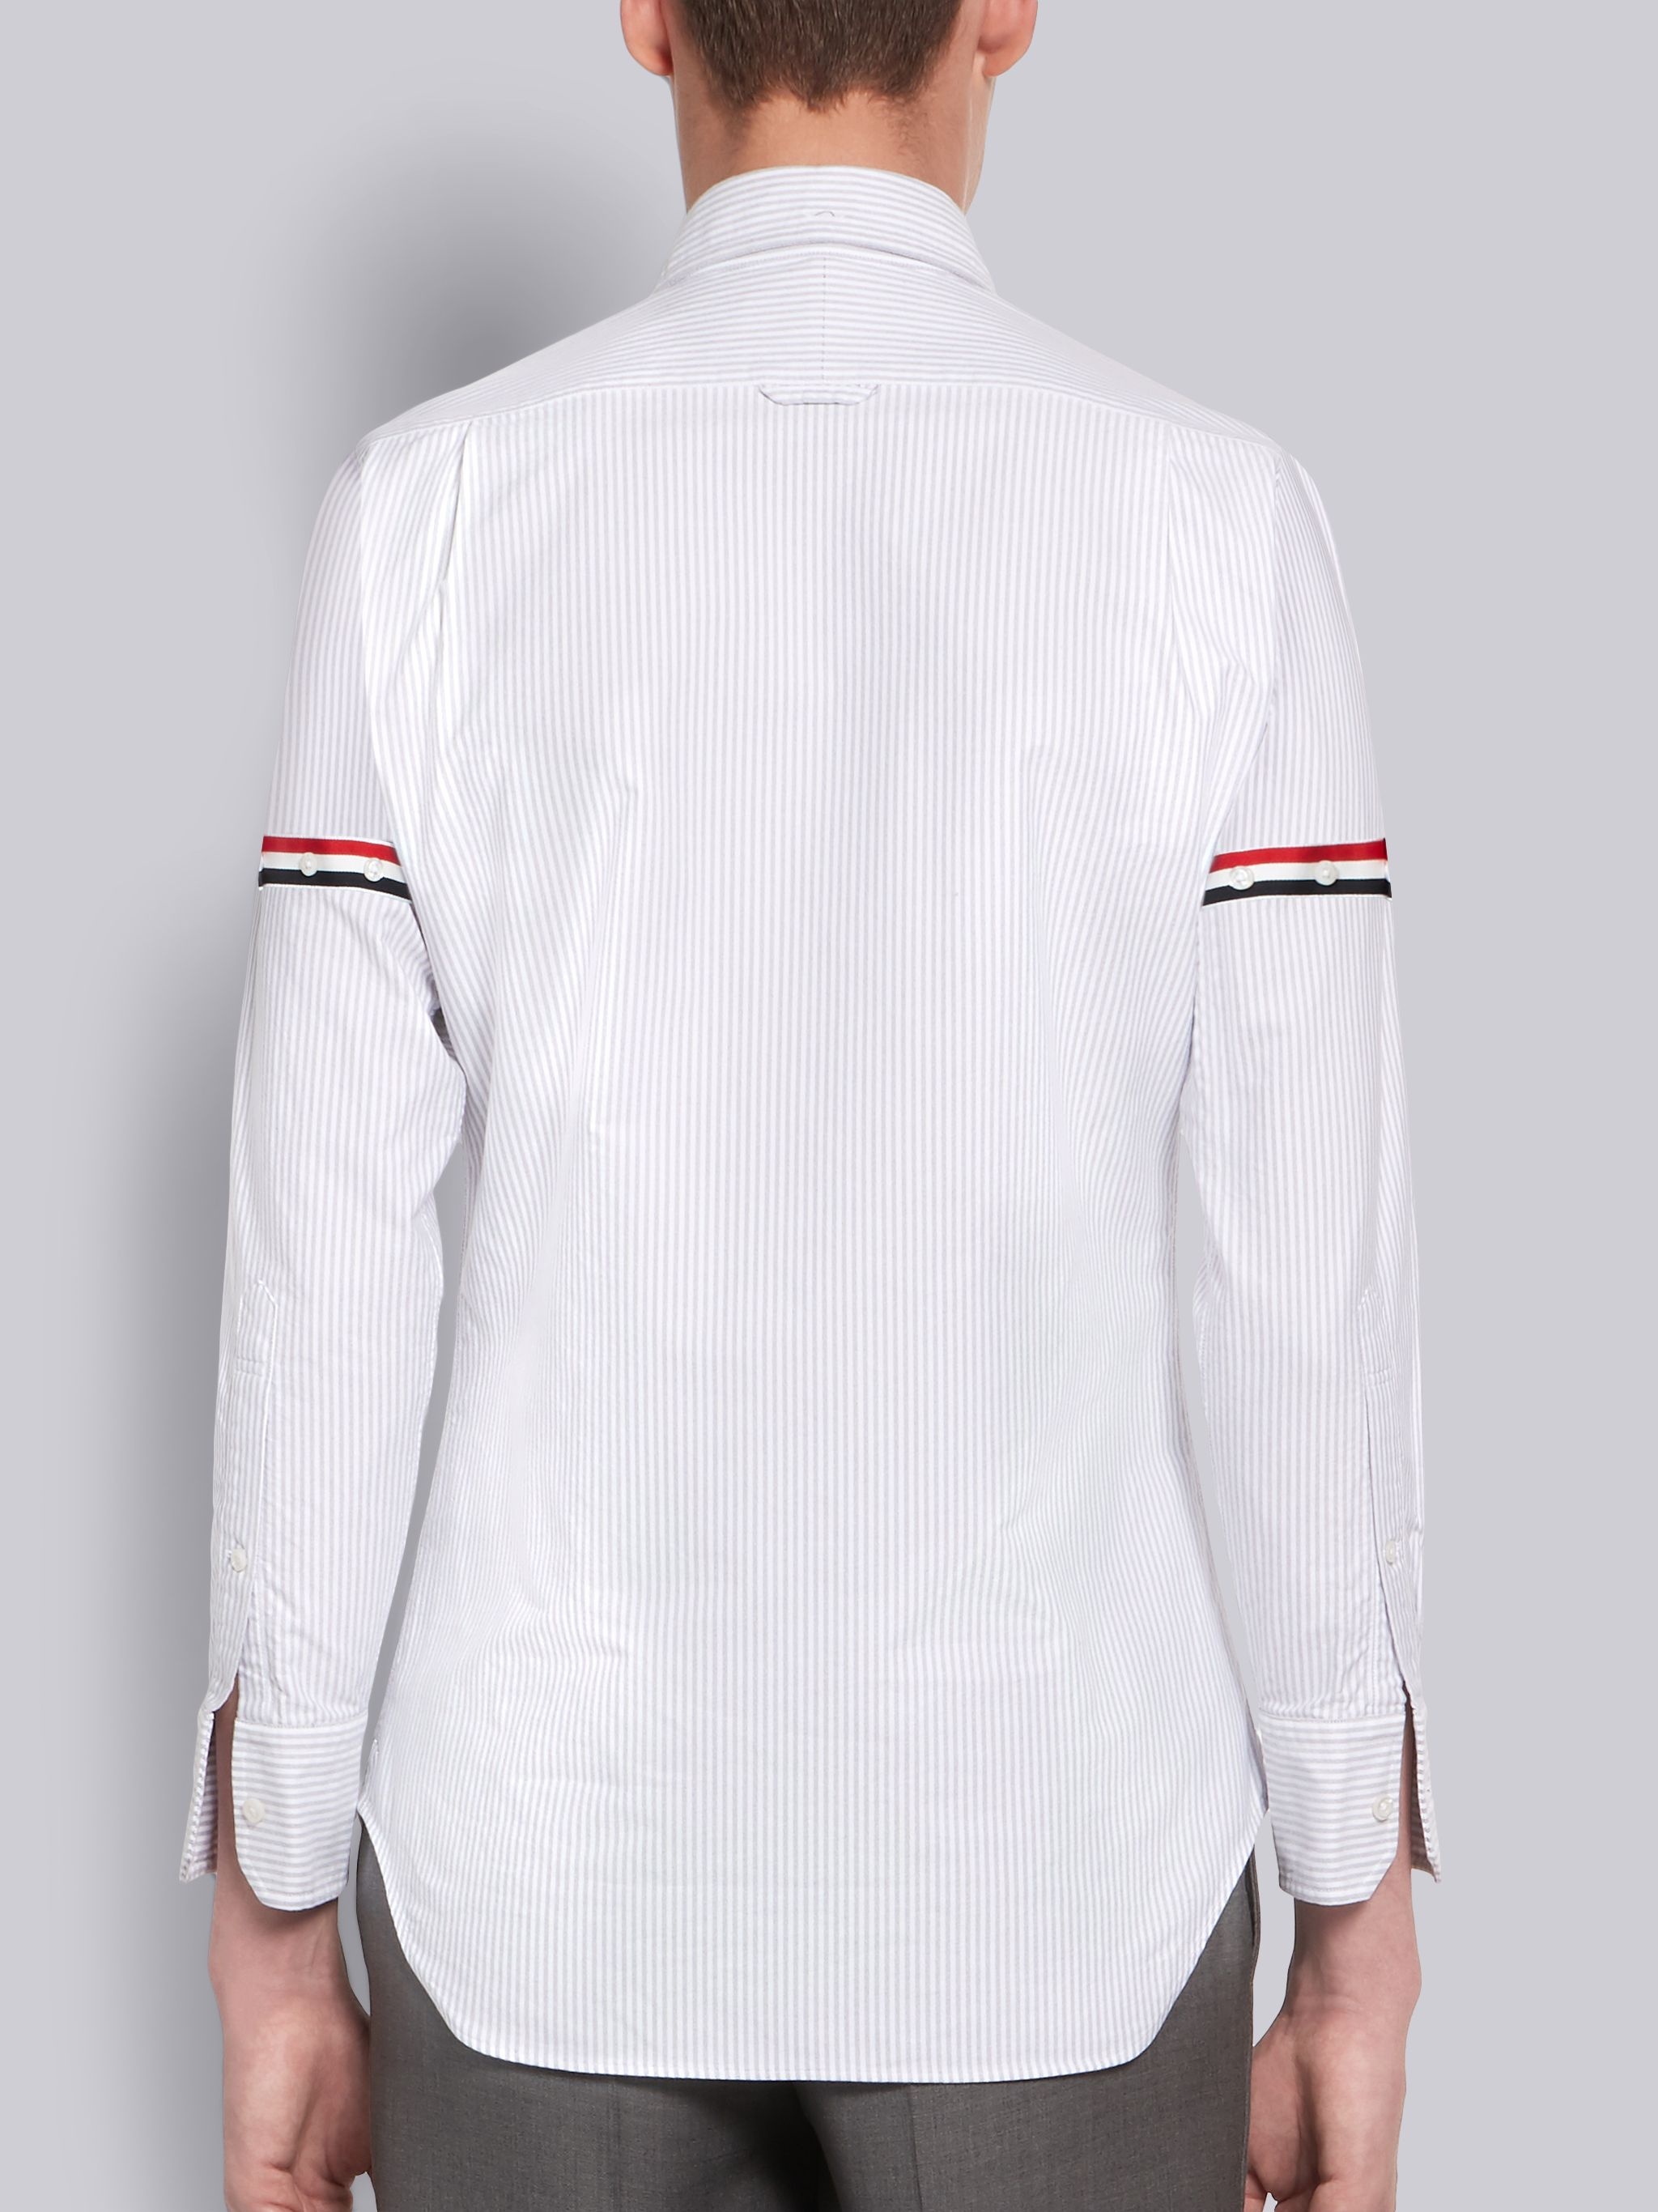 Medium Grey Oxford Cotton University Stripe Grosgrain Armband Shirt - 4